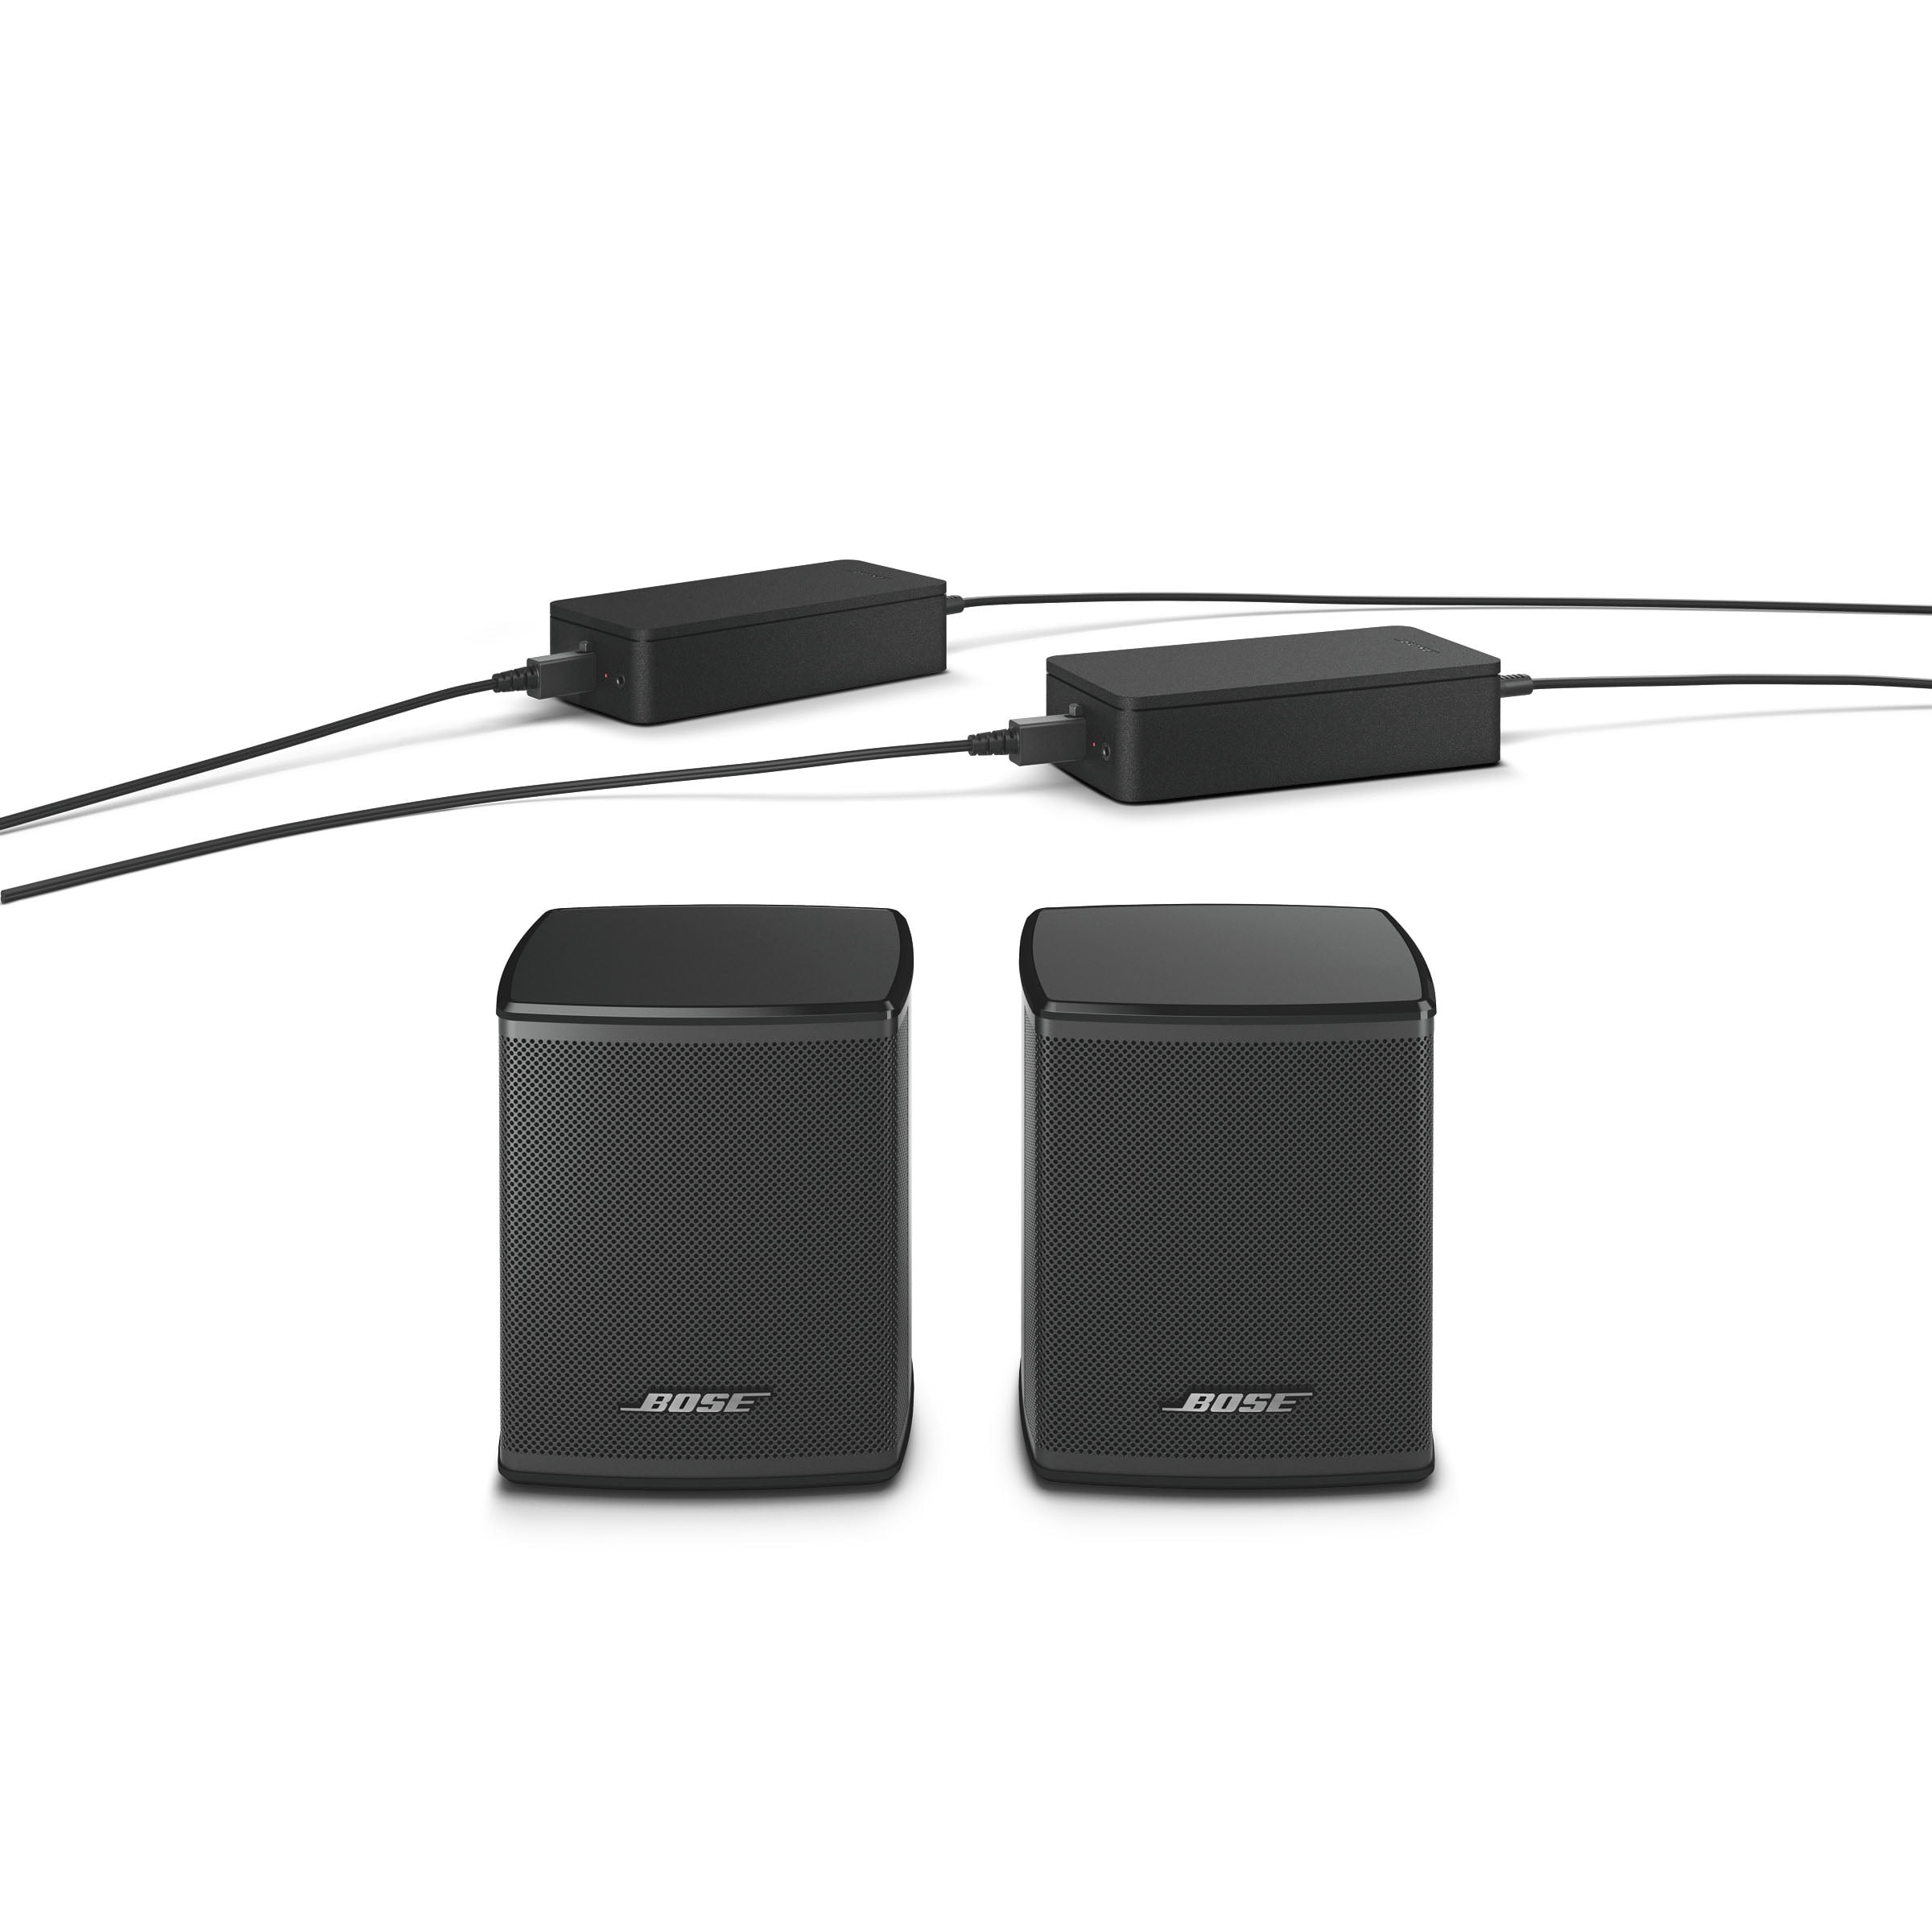 Bose Surround Sound Rear Speakers for Bose Soundbars, Black